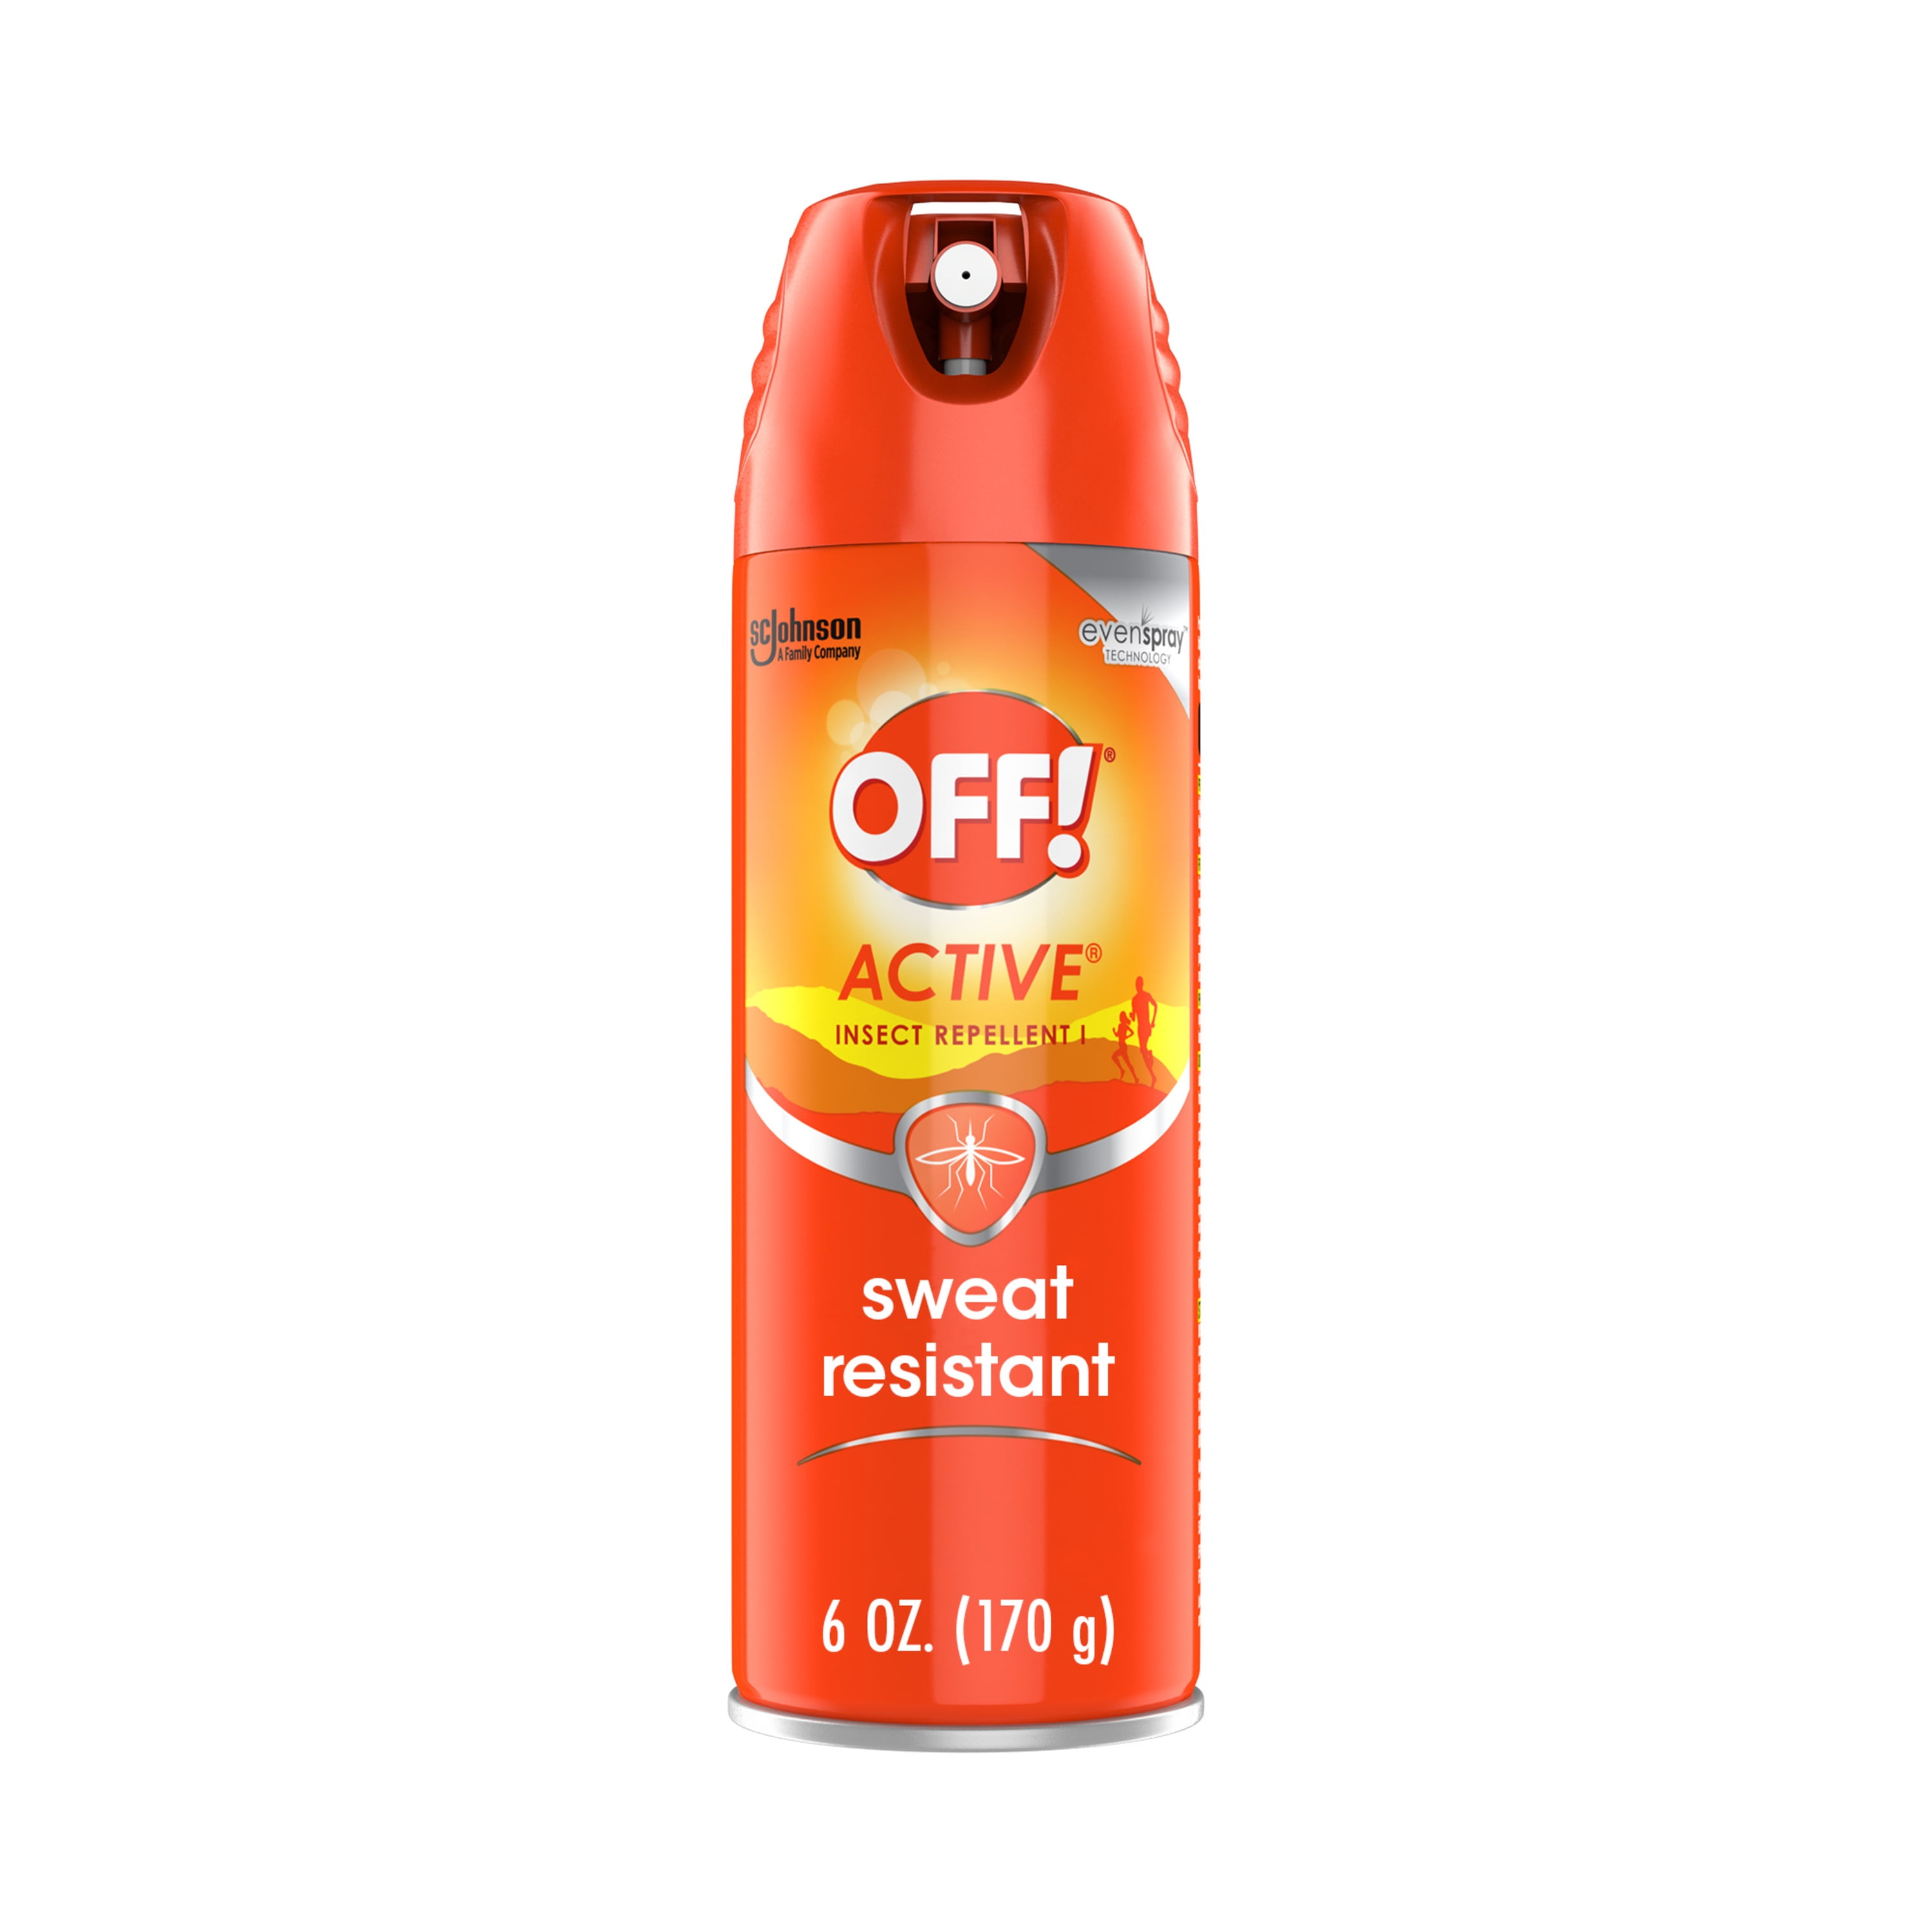 OFF! Active Mosquito Repellent I, 6 oz